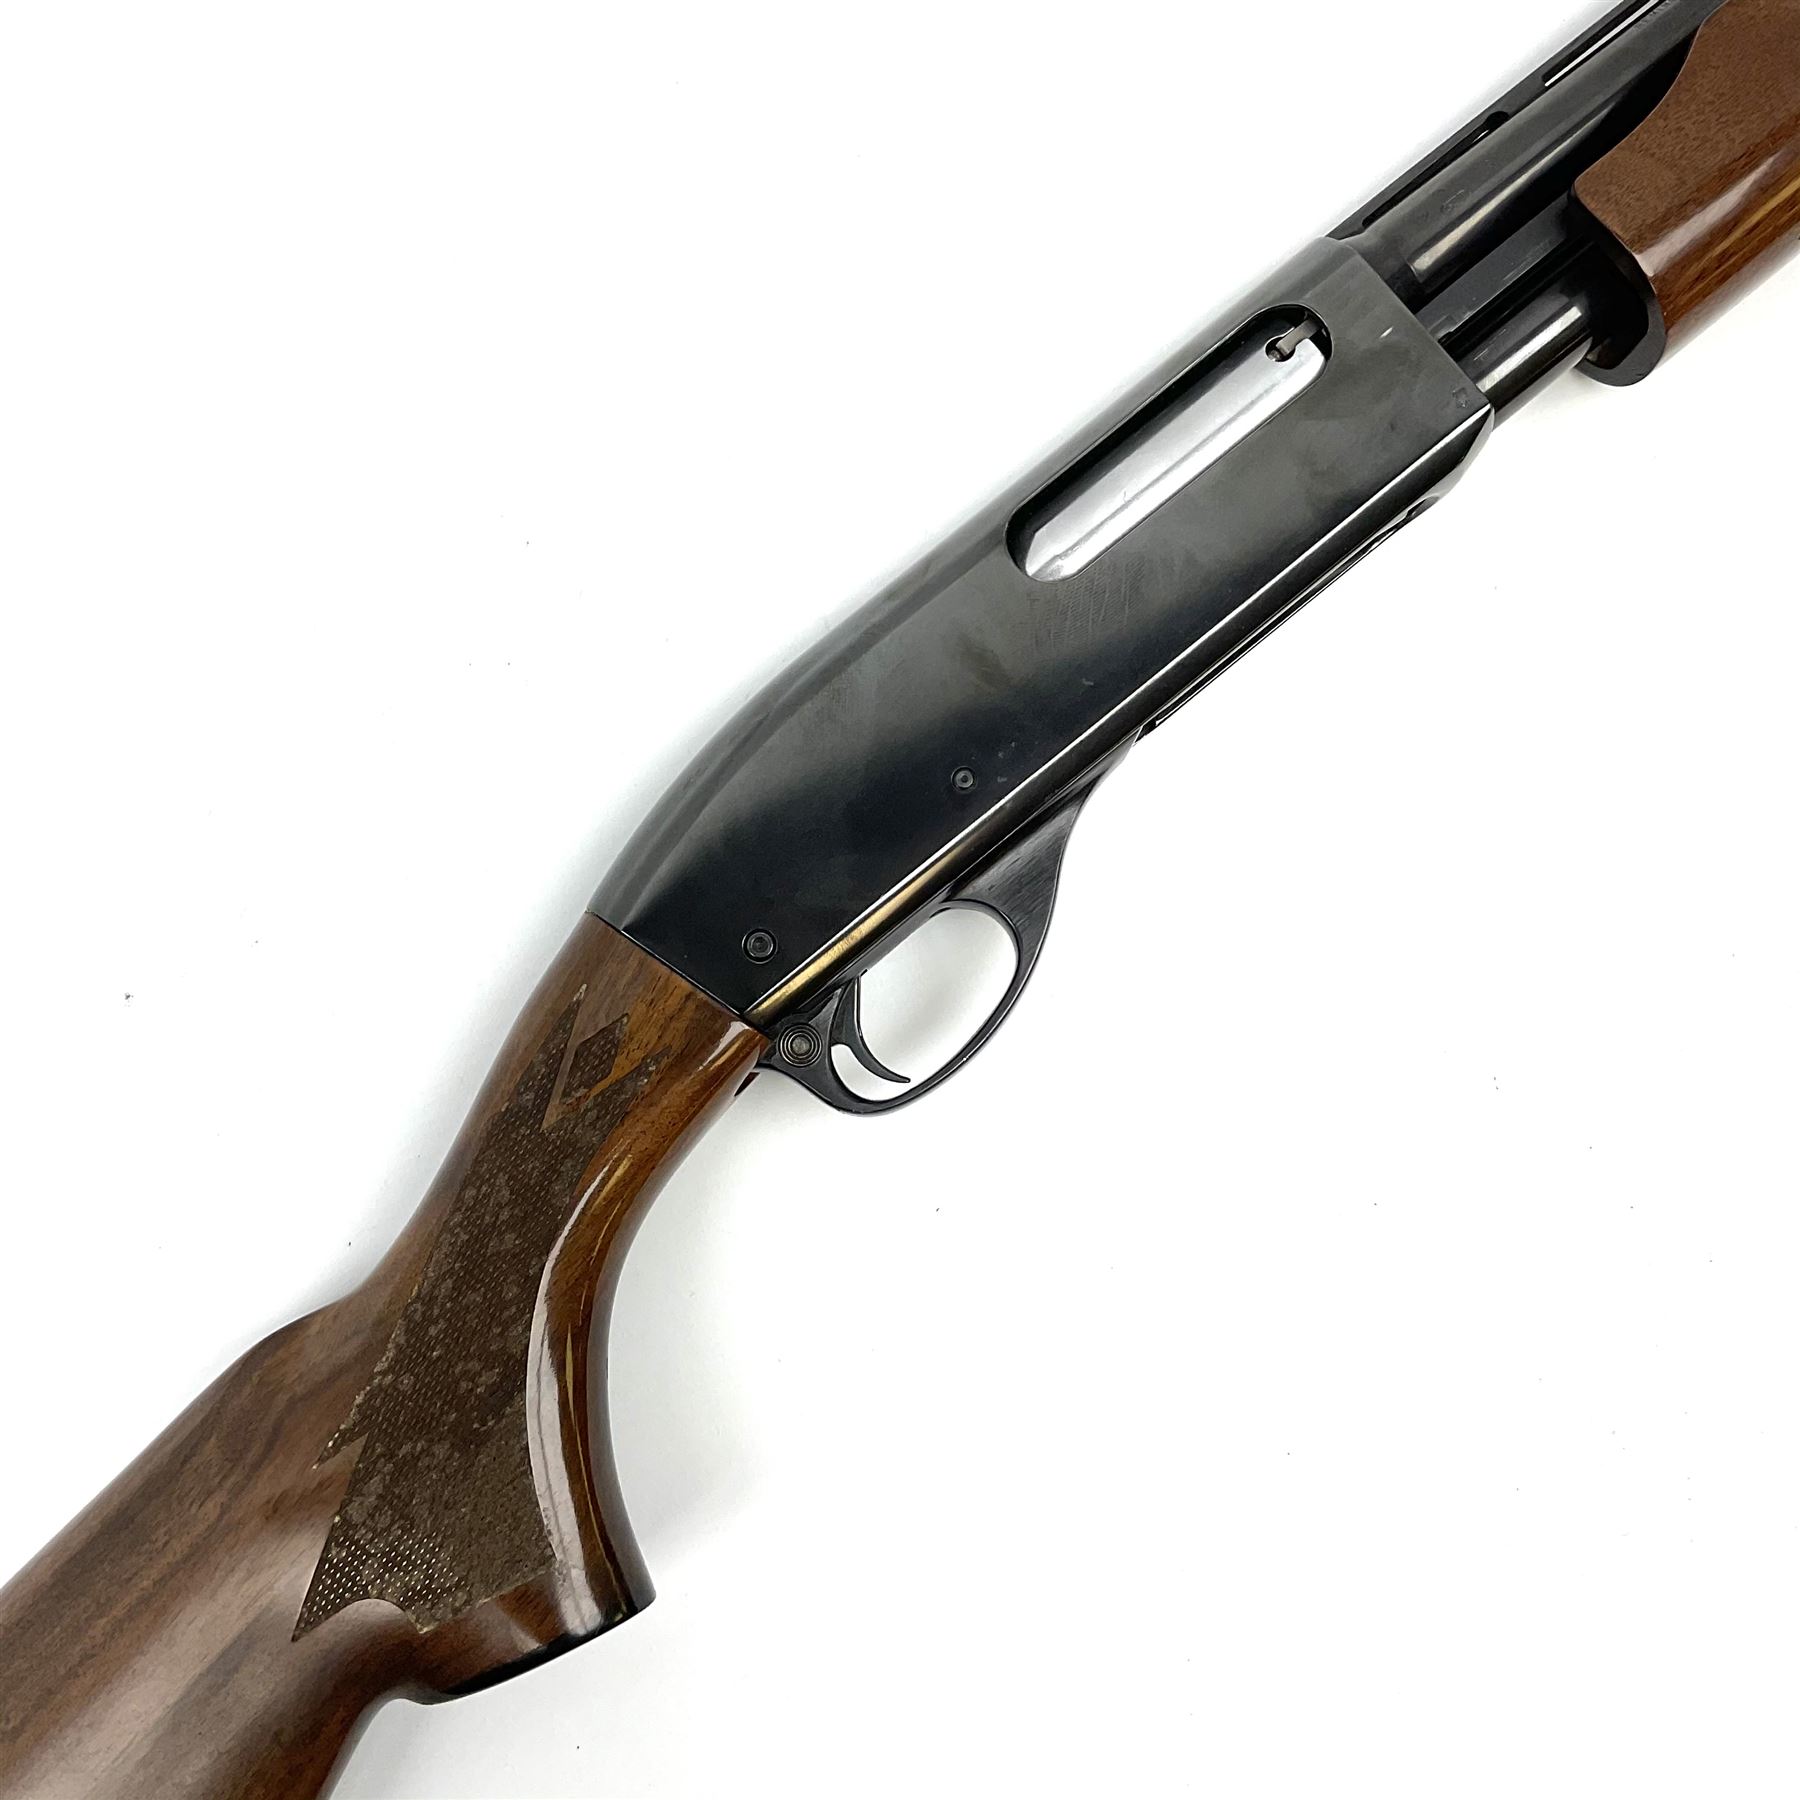 Remington Wingmaster model 870LW 28-bore three-shot pump-action shotgun with 2.75" chamber